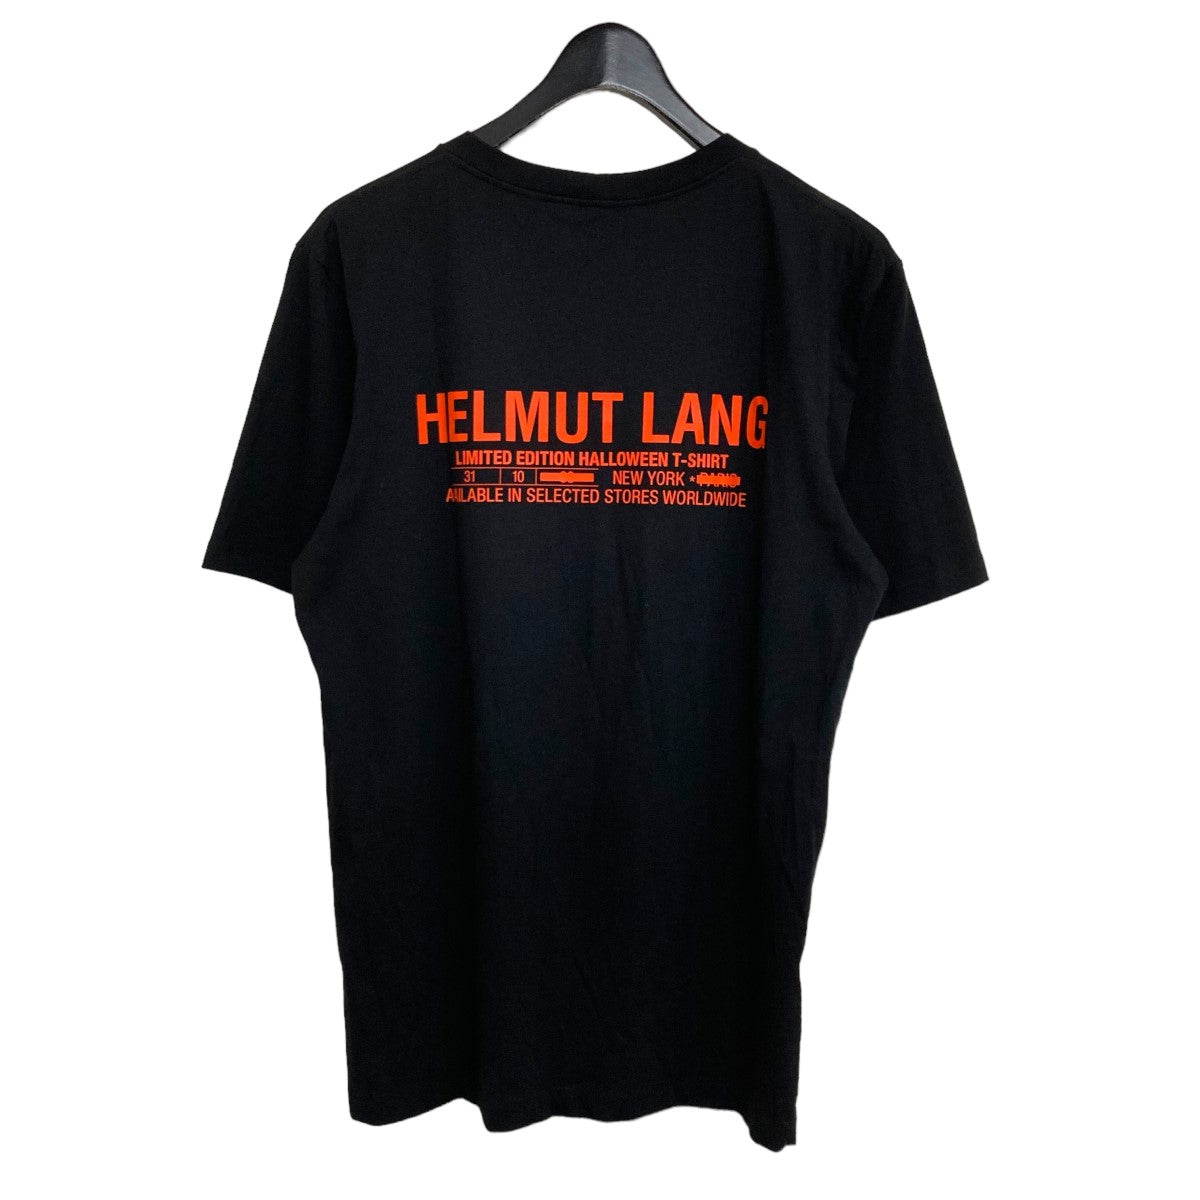 HELMUT LANG(ヘルムートラング) クルーネックTシャツ I09PM501 ...